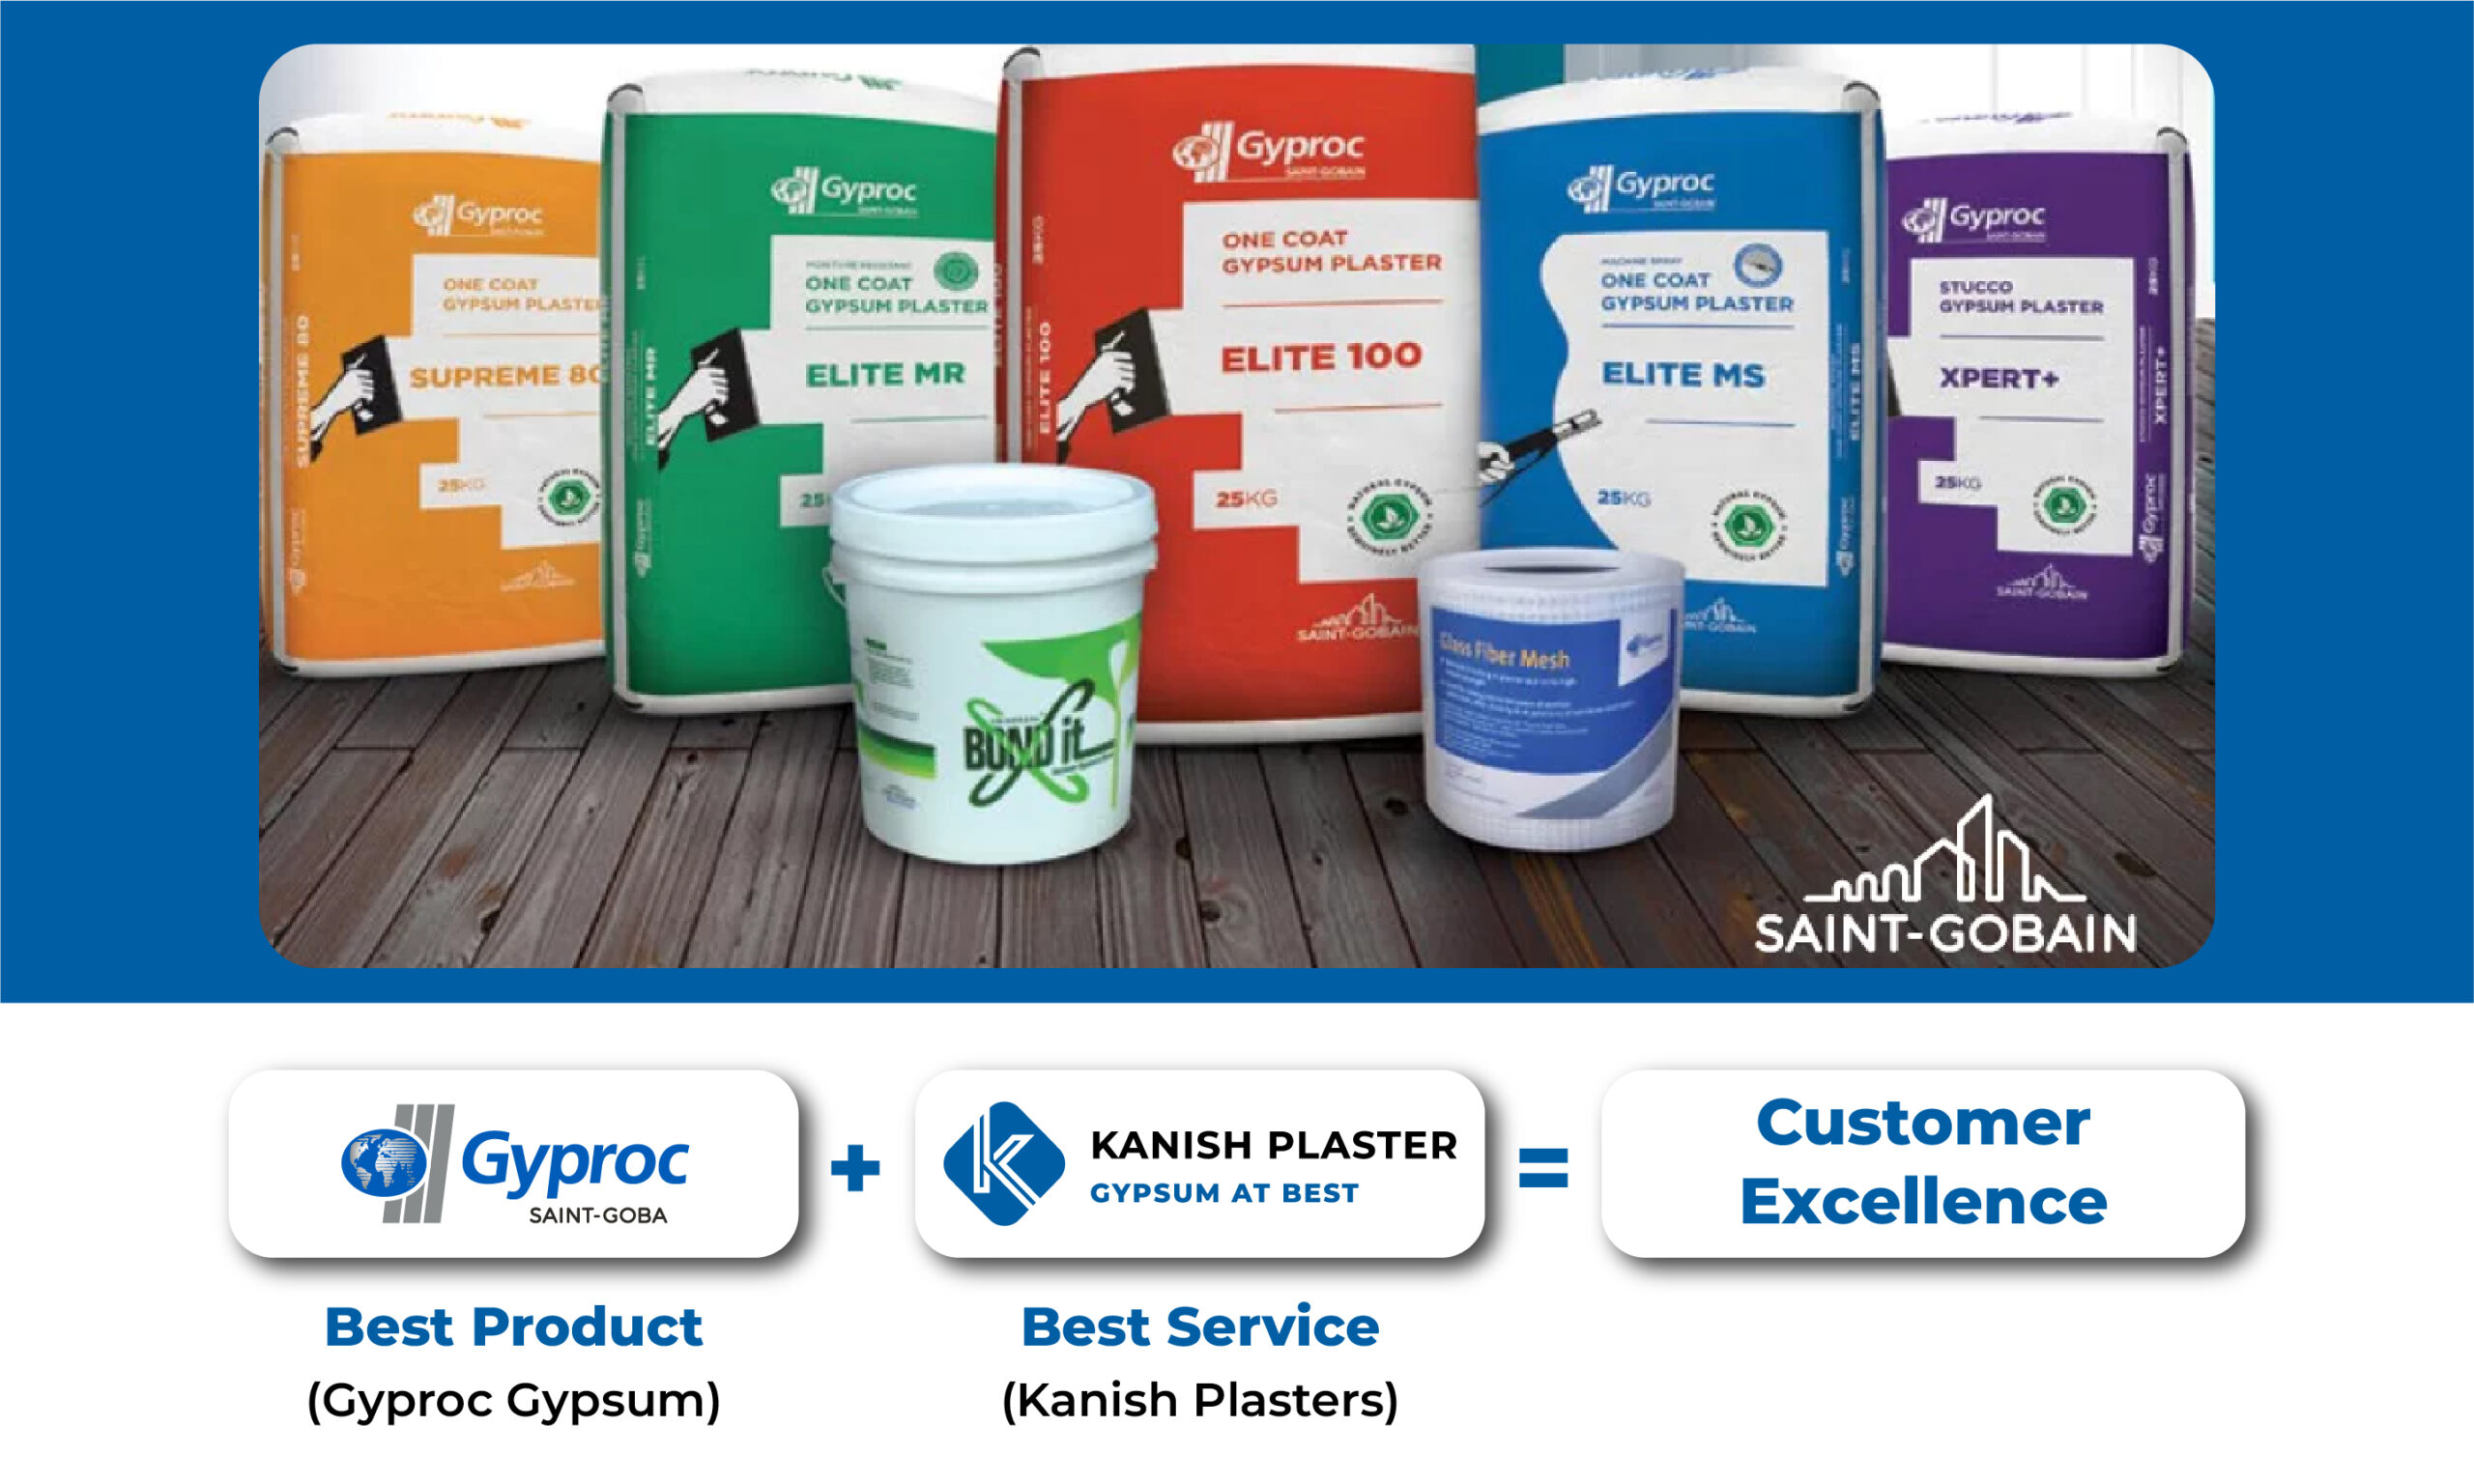 Gyproc Brand Building Material Suppliers Dubai, UAE | Qcon